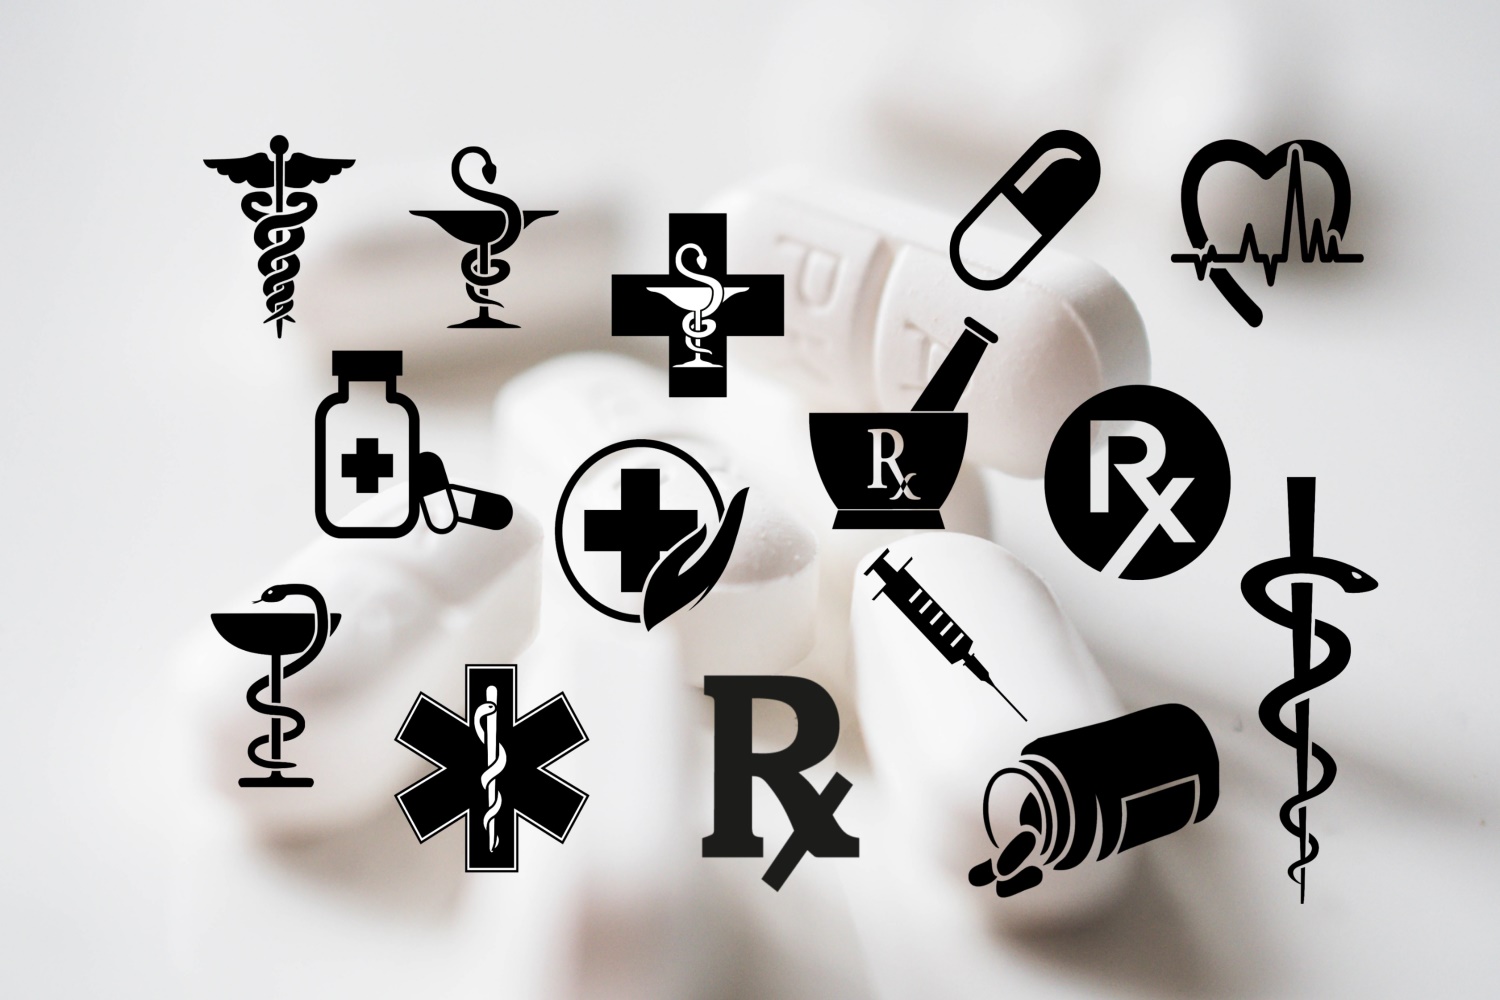 Medical Prescription SVG PNG JPG Symbols + Font, Nursing symbol, pharmacy, snake, Download Hight quality Transparent Vector Silhouette Clipart Image Instant Download pinterest preview image.